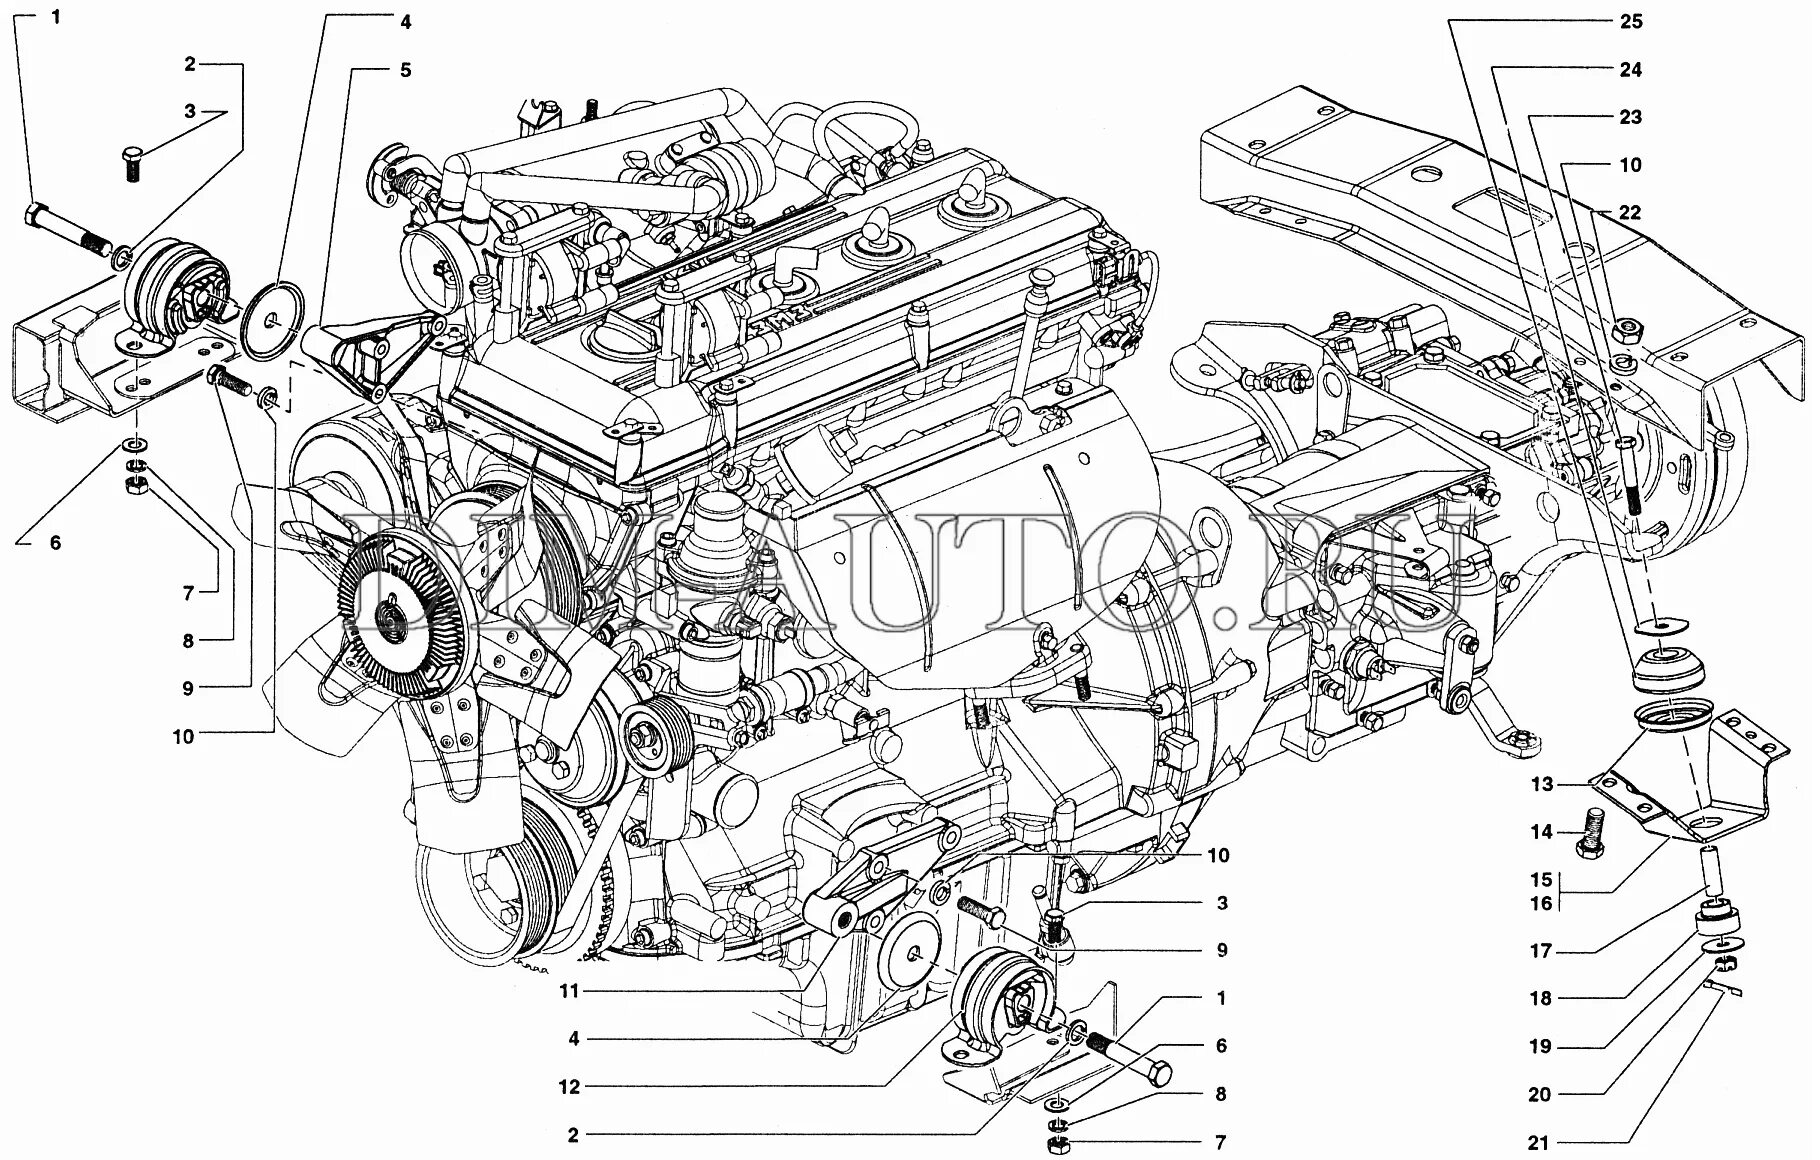 Двигатель ЗМЗ 409 чертеж. 409 Двигатель УАЗ комплектующие. УАЗ 409 Буханка. Схема УАЗ Буханка 409 двигатель.